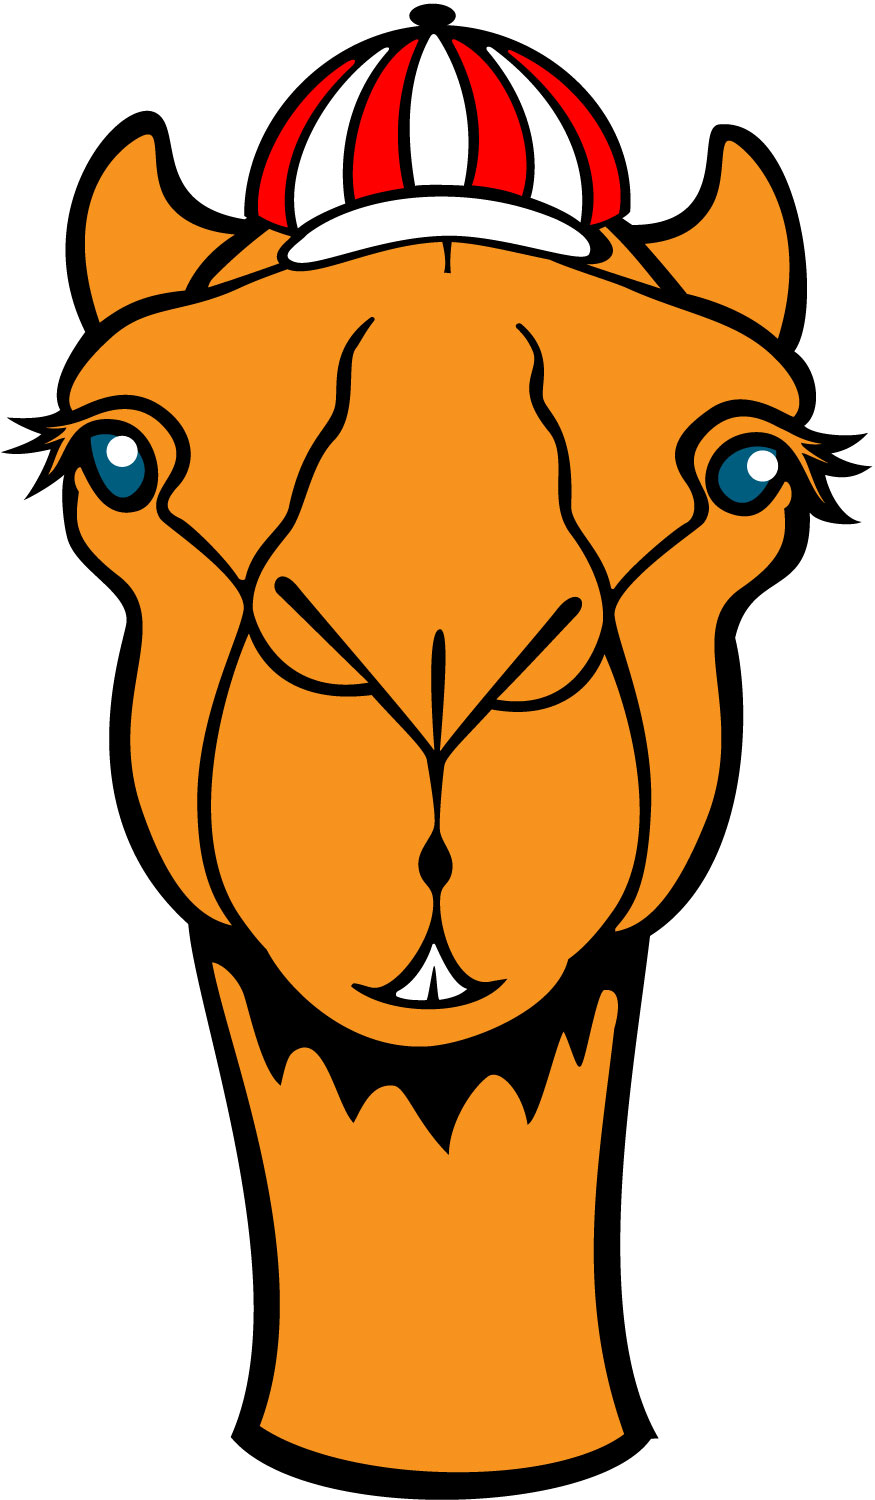 Clip art camel clipart 2 image